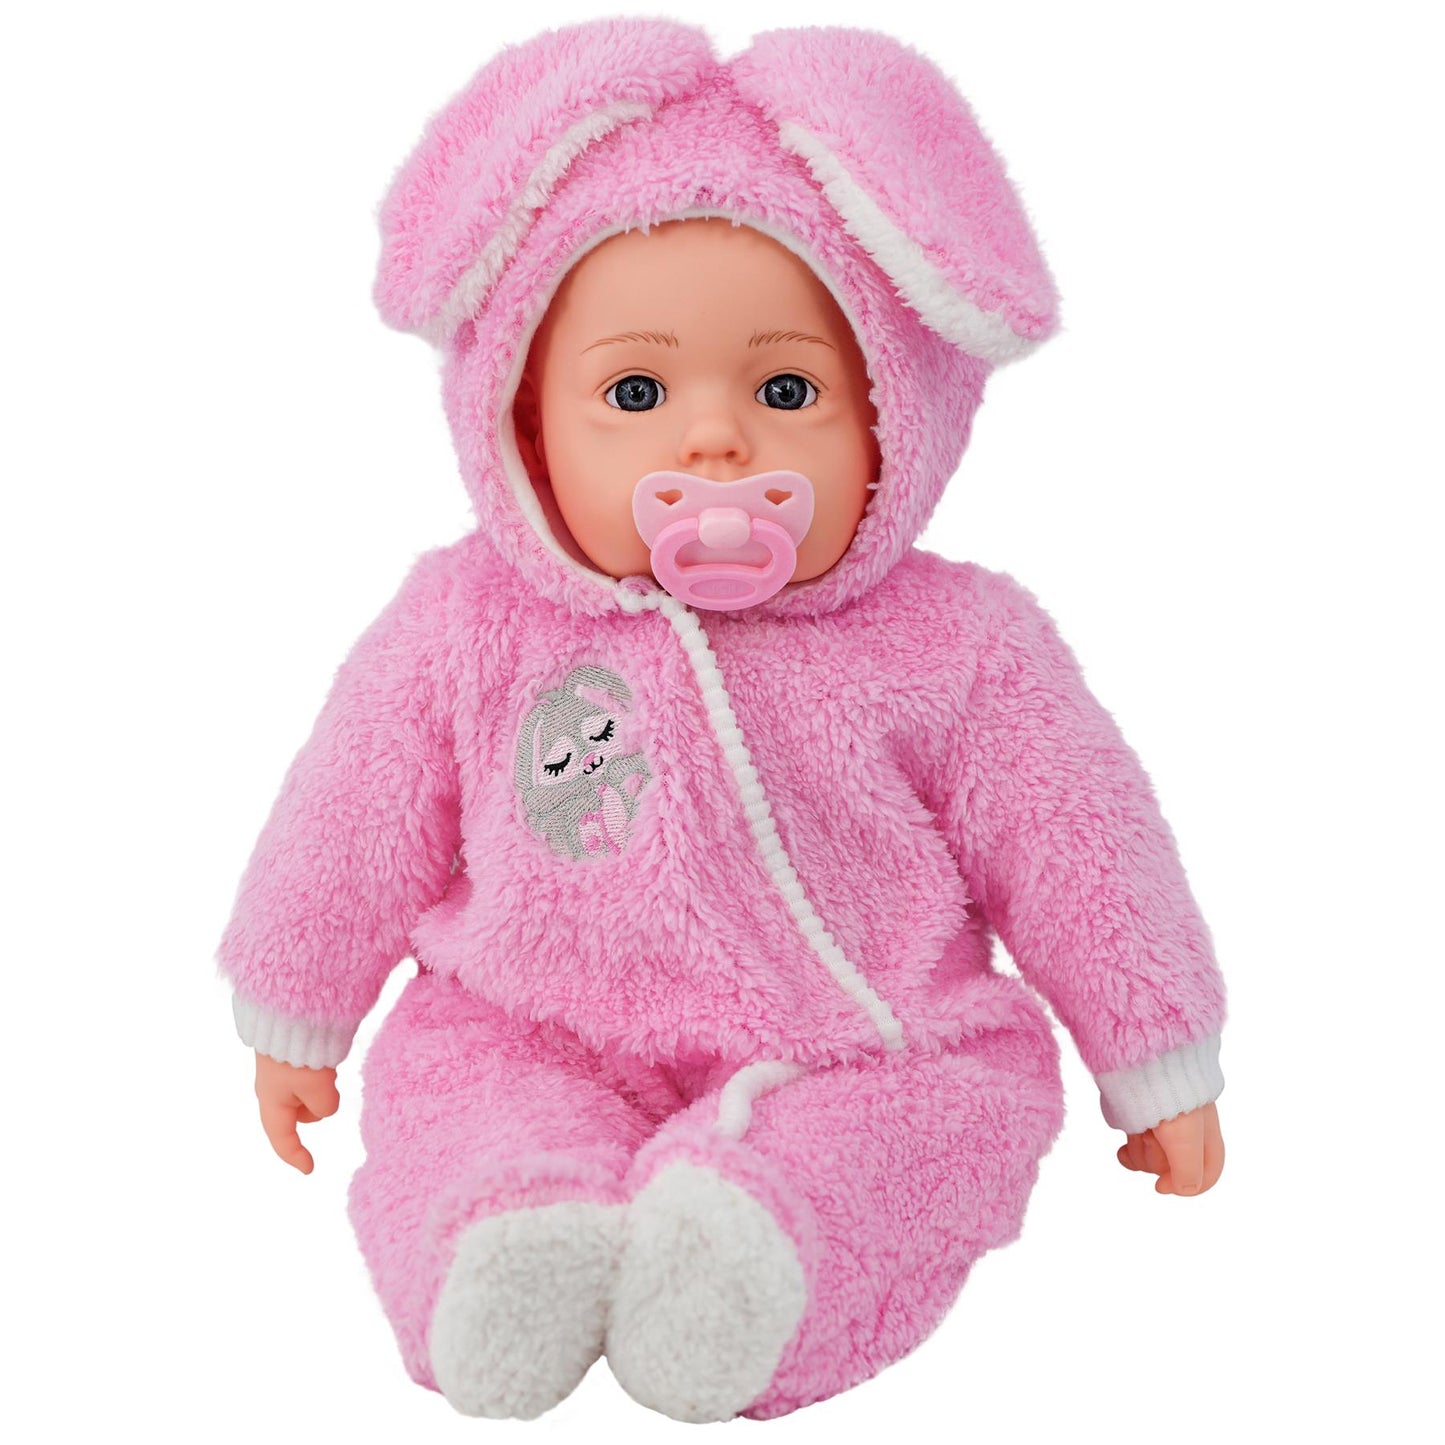 20” Bibi Girl Doll In Baby Pink Jumpsuit by BiBi Doll - UKBuyZone